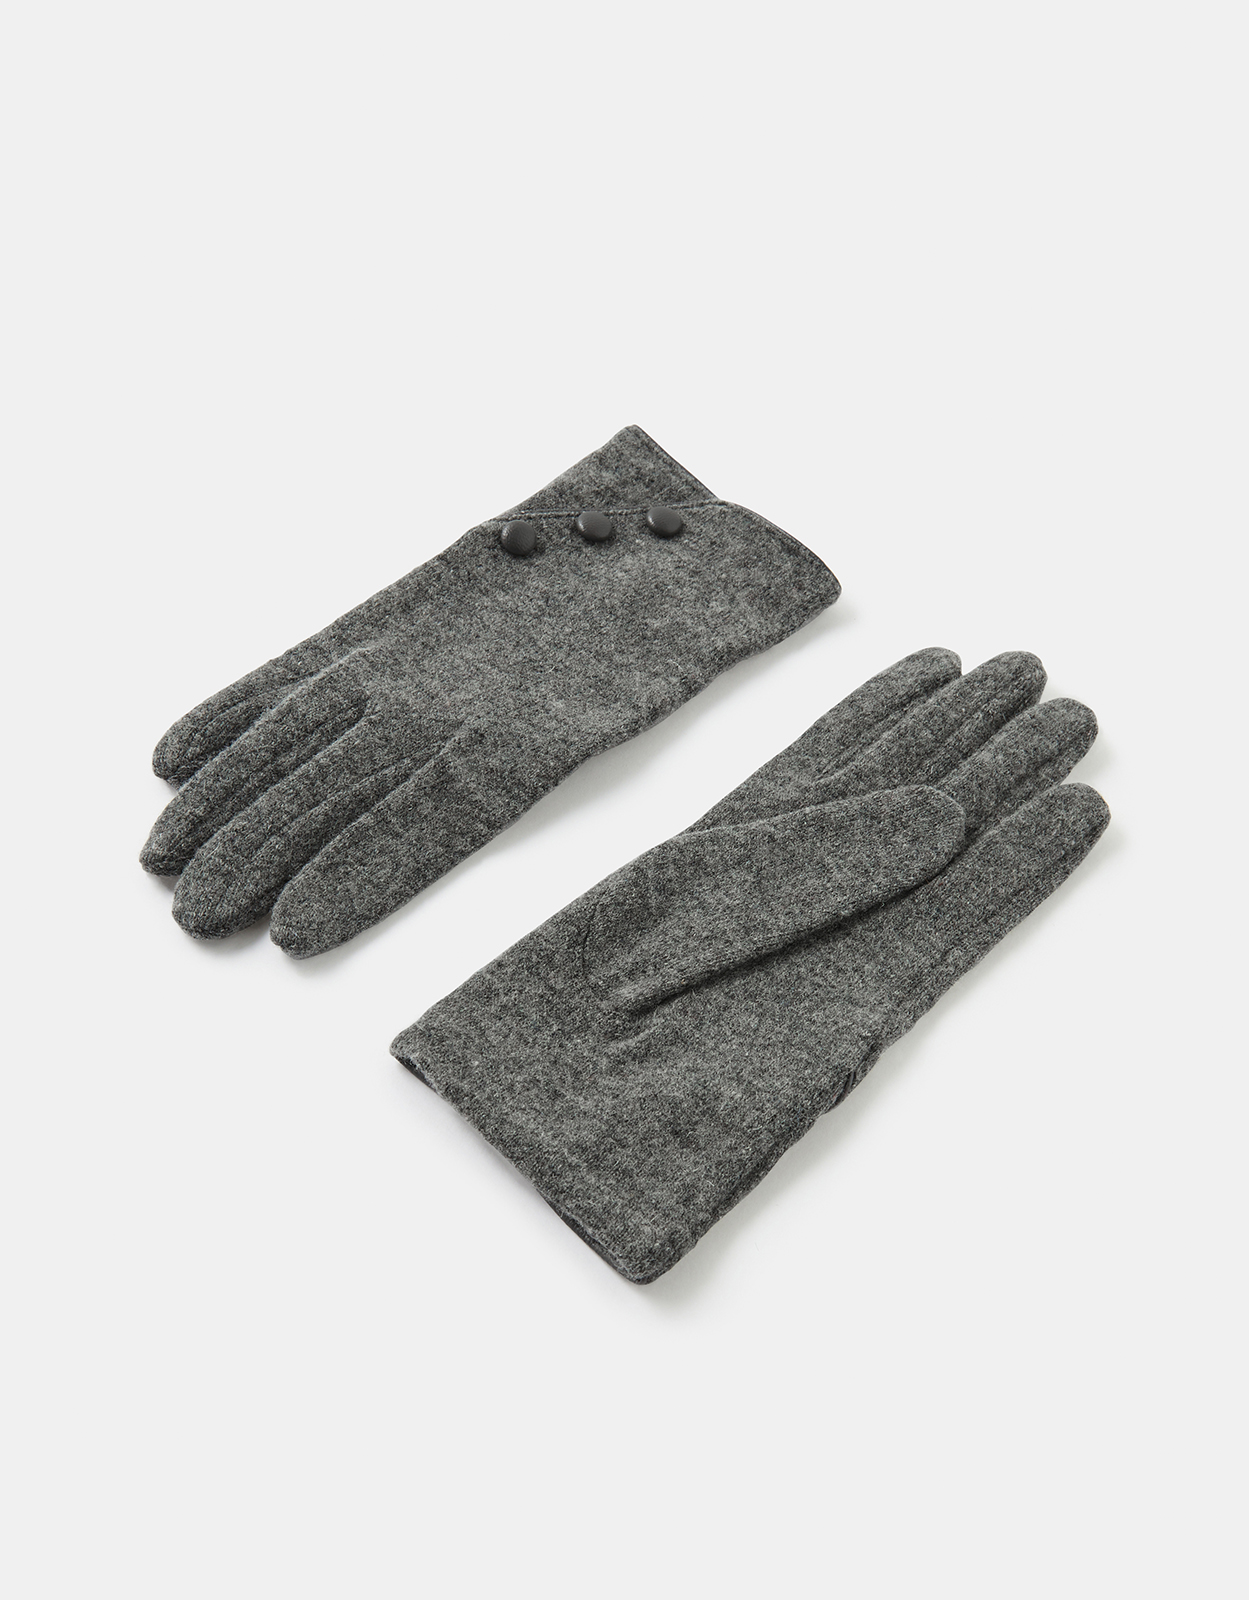 Accessorize Women's Grey Wool Button Detail Gloves, Size: M / L